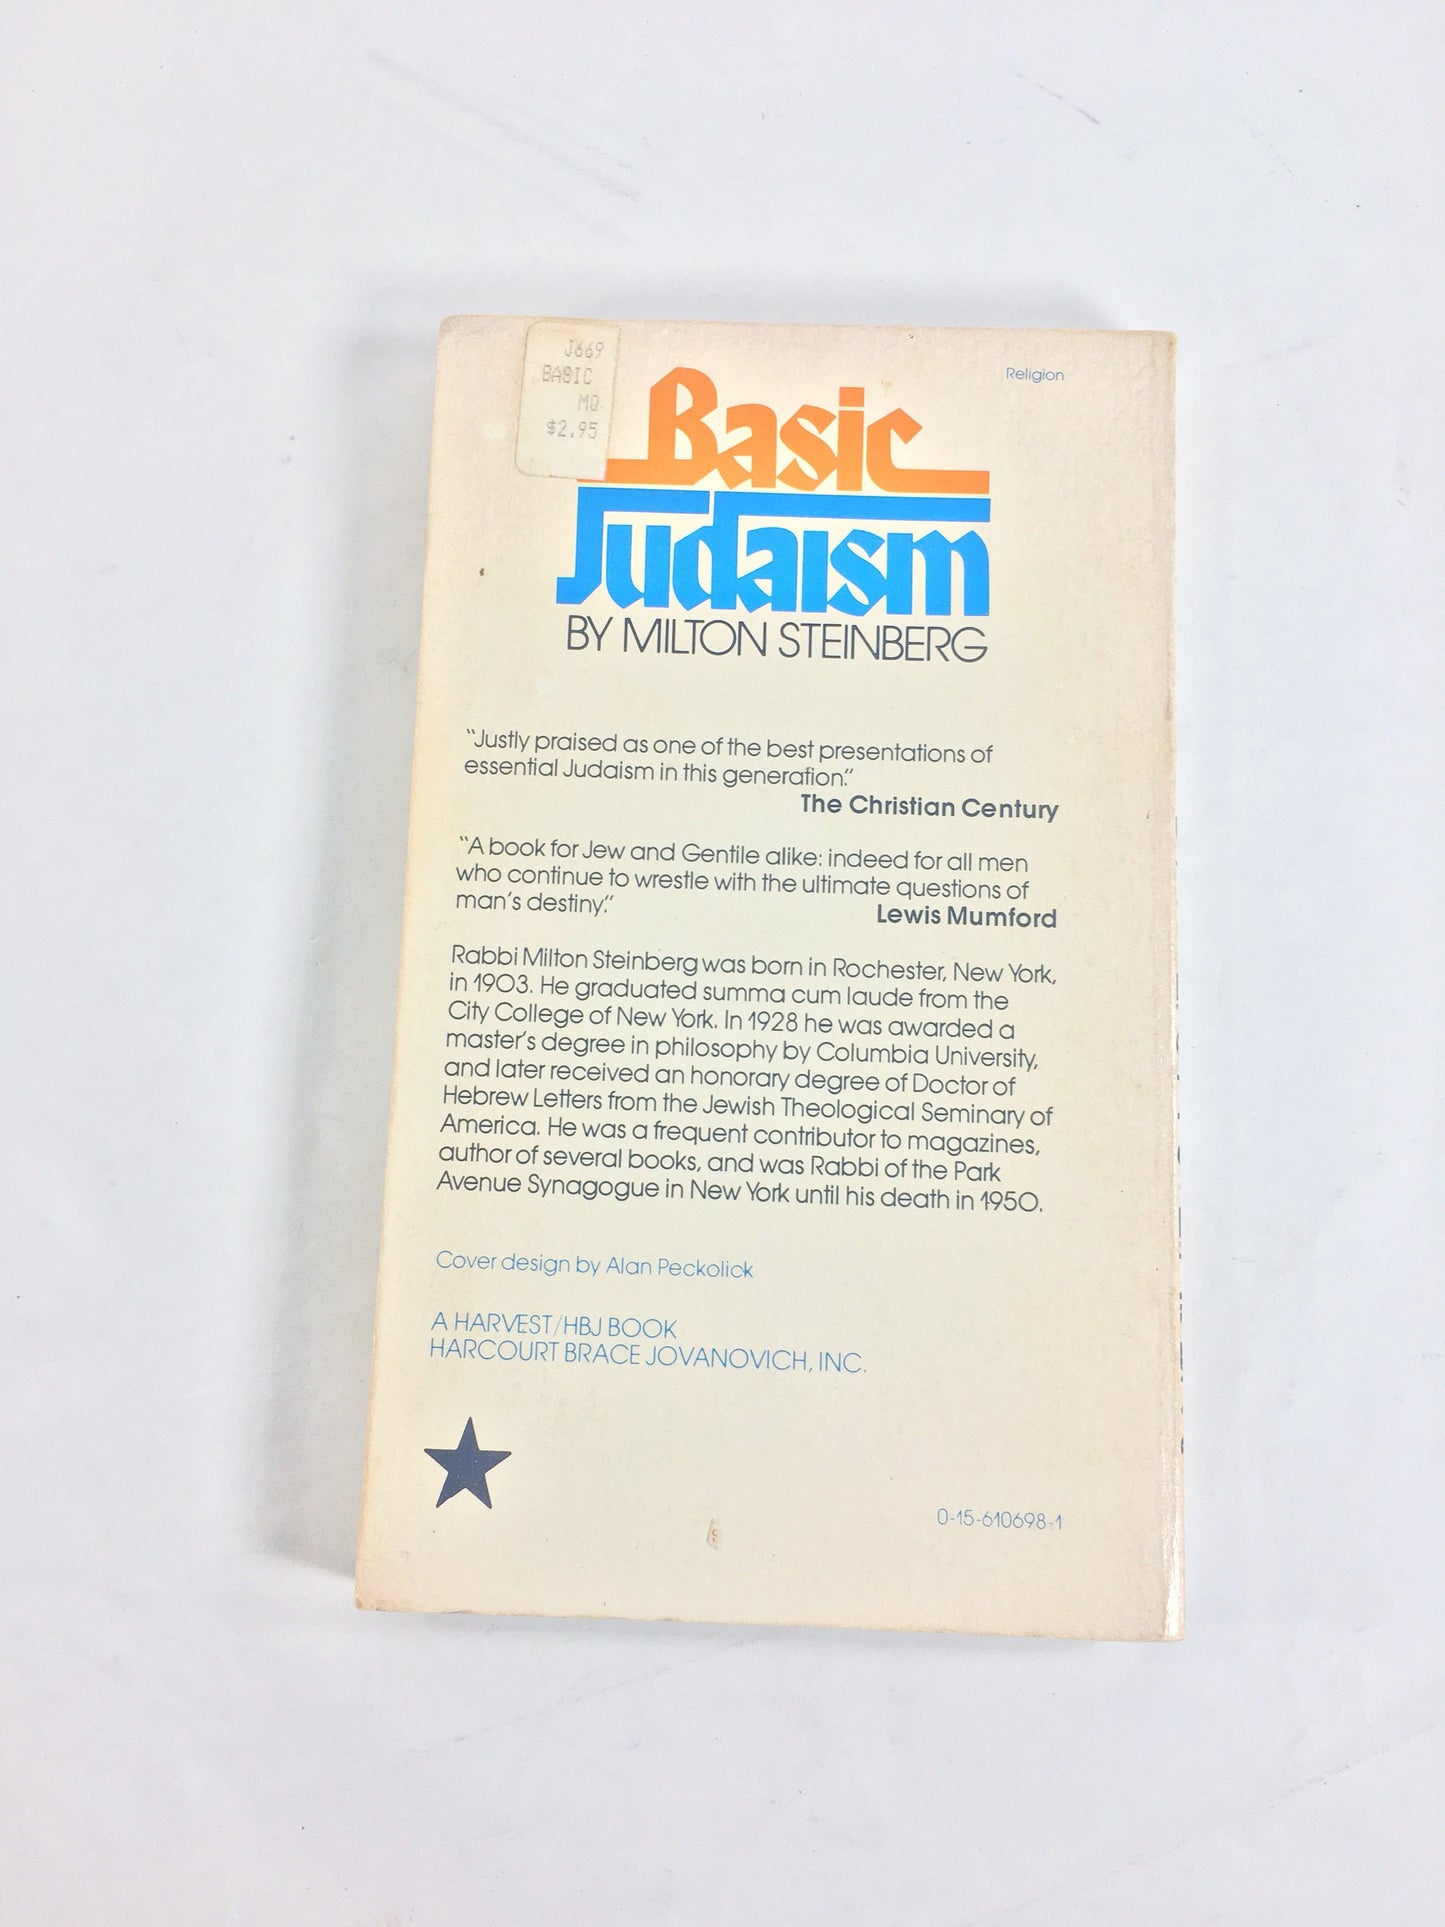 Milton Steinberg's Basic Judaism. Vintage paperback book circa 1975. Jewish gift. Conversion understanding anti-antisemitism